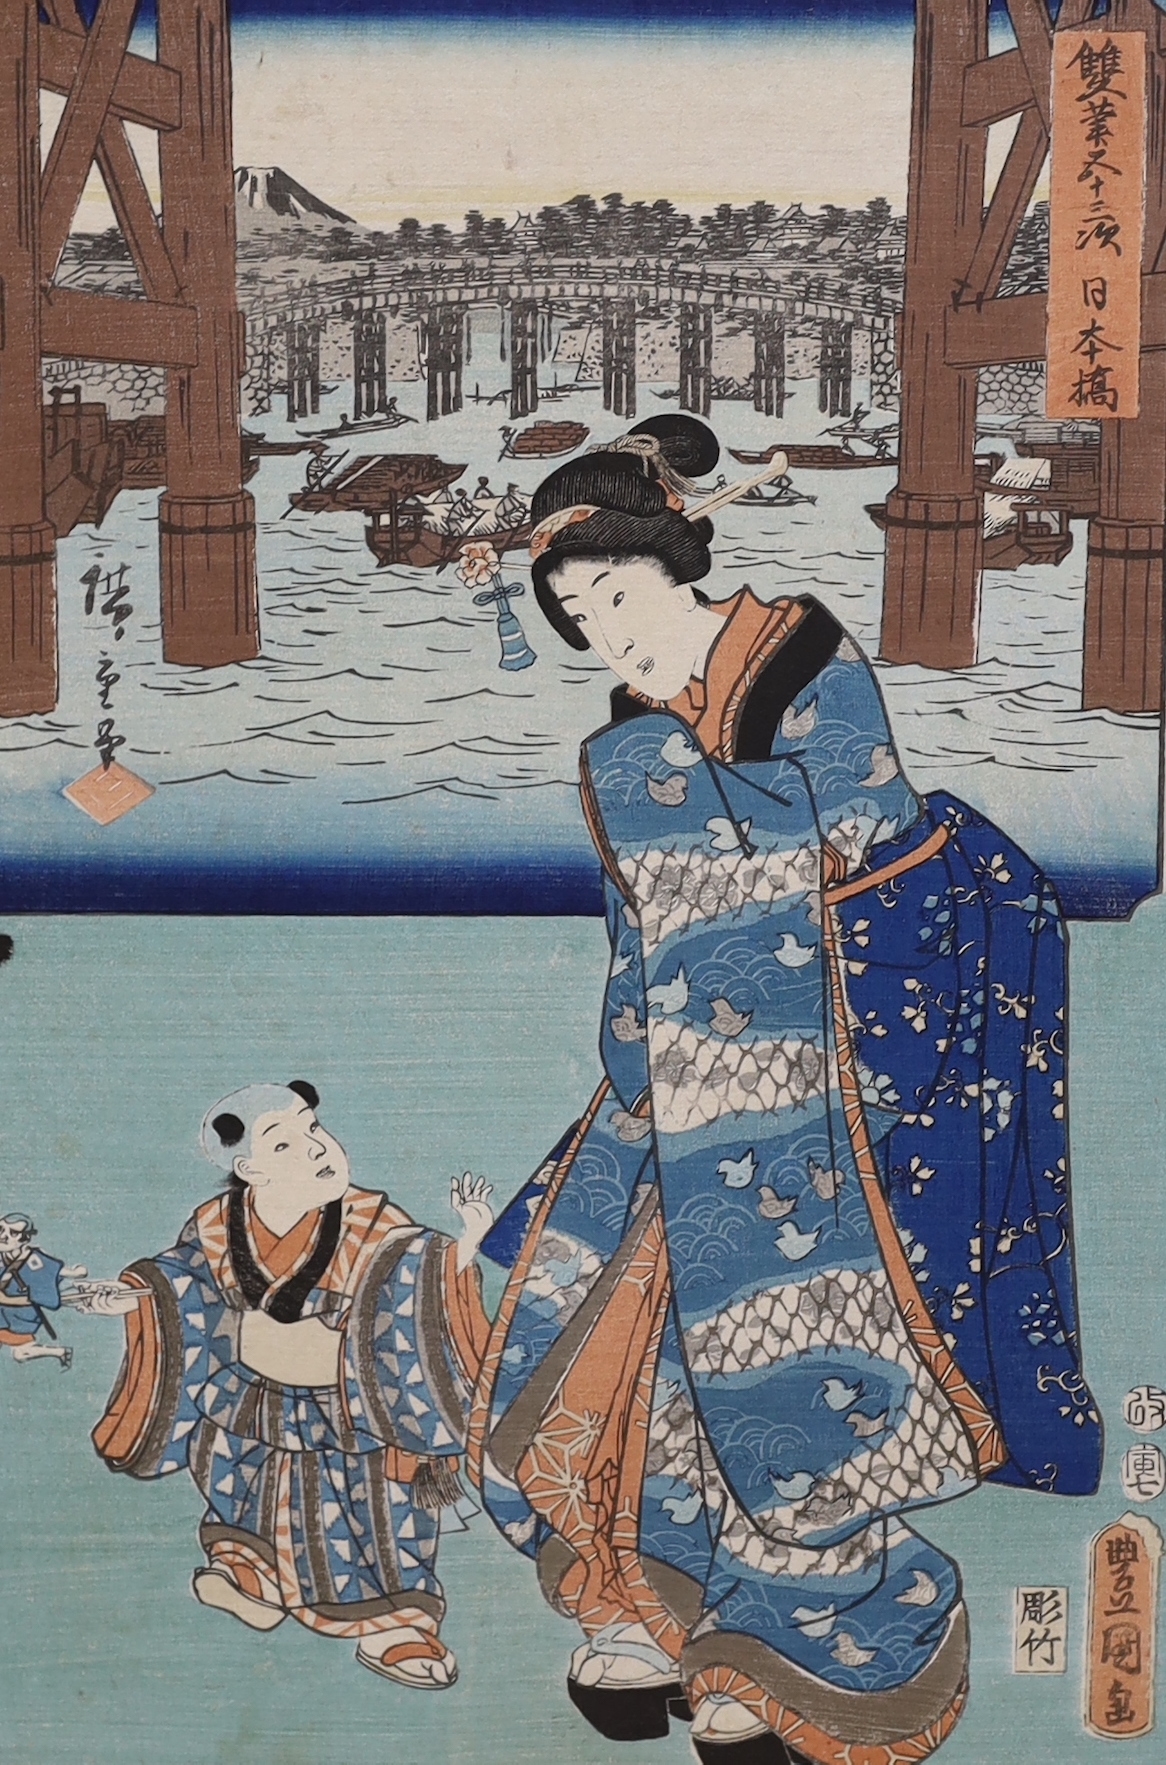 Nihonbashi - Utagawa Hiroshige